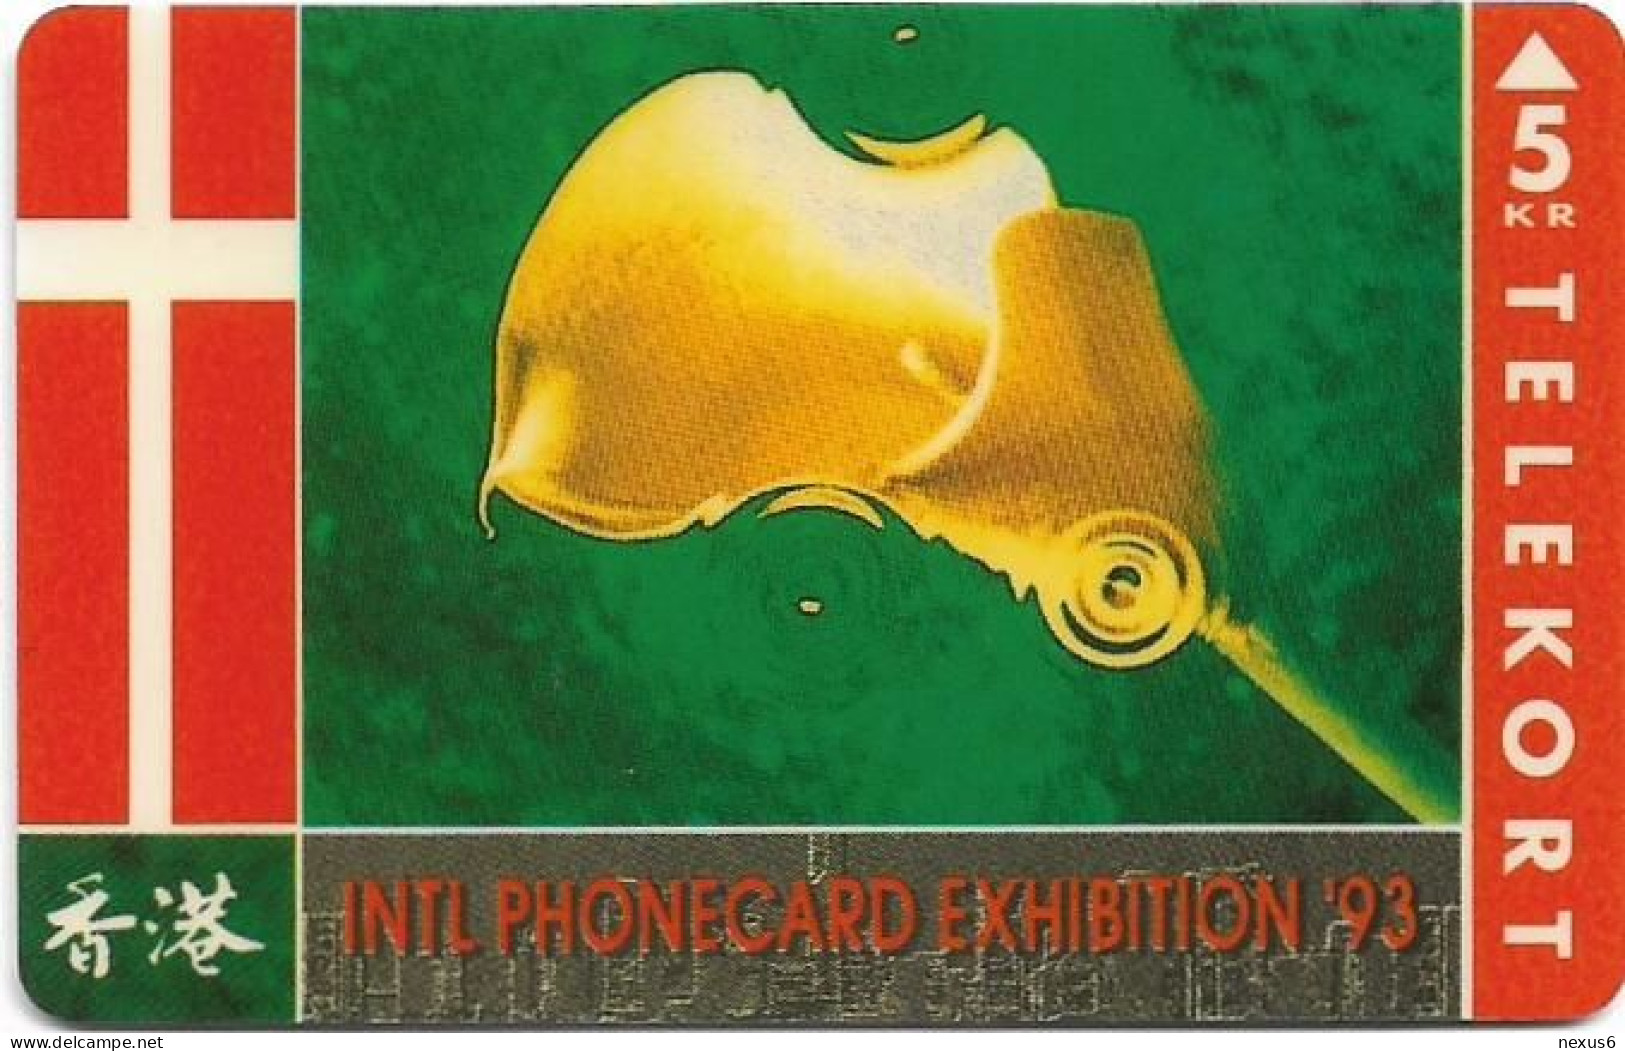 Denmark - KTAS - Intl. Phonecard Expo '93 Hong Kong - TDKP022 - 04.1993, 5kr, 4.000ex, Used - Denmark